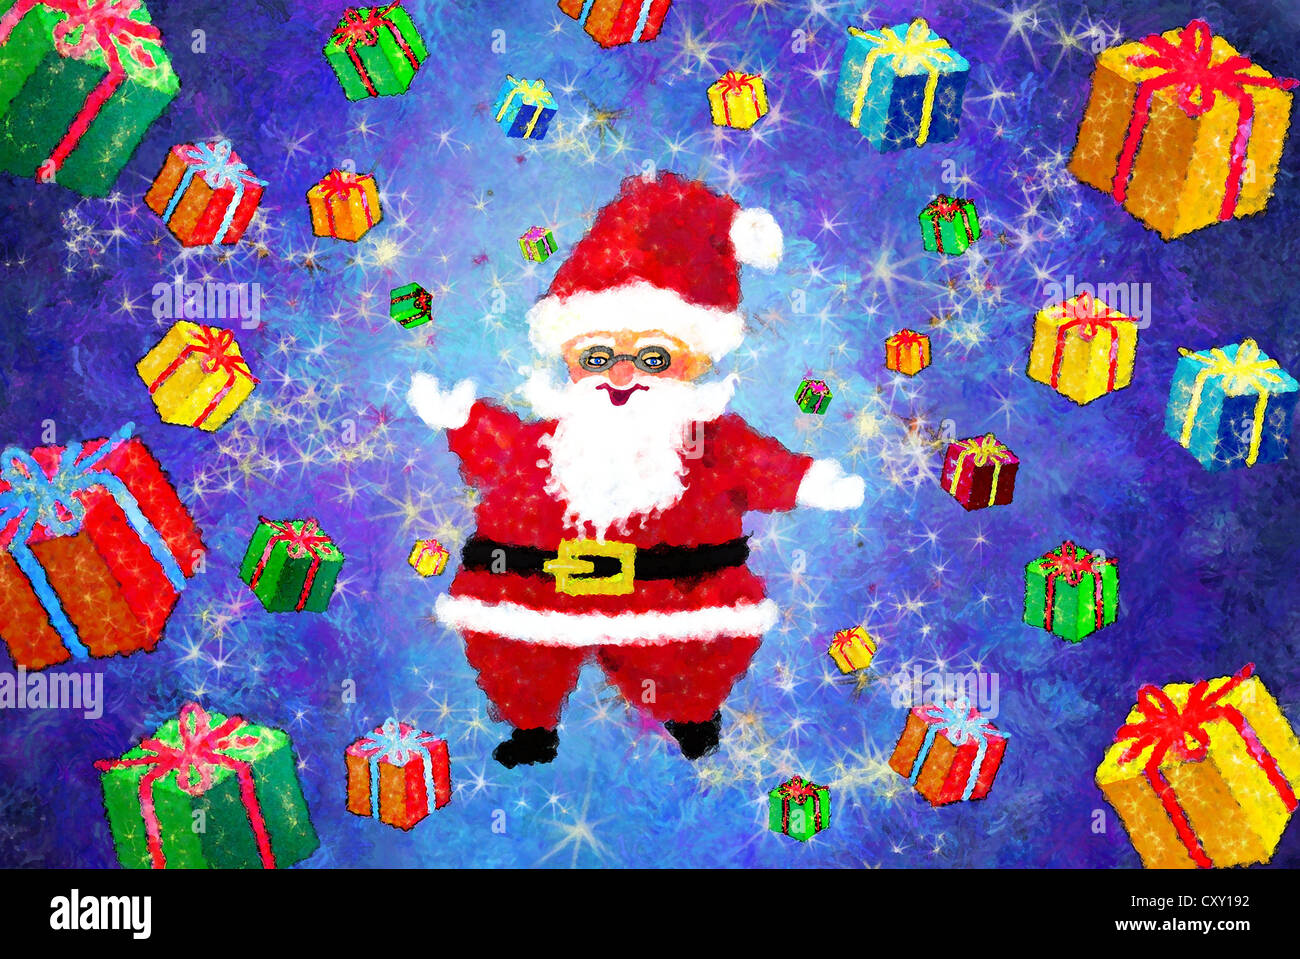 Santa Claus merrily juggling Christmas presents, illustration Stock Photo